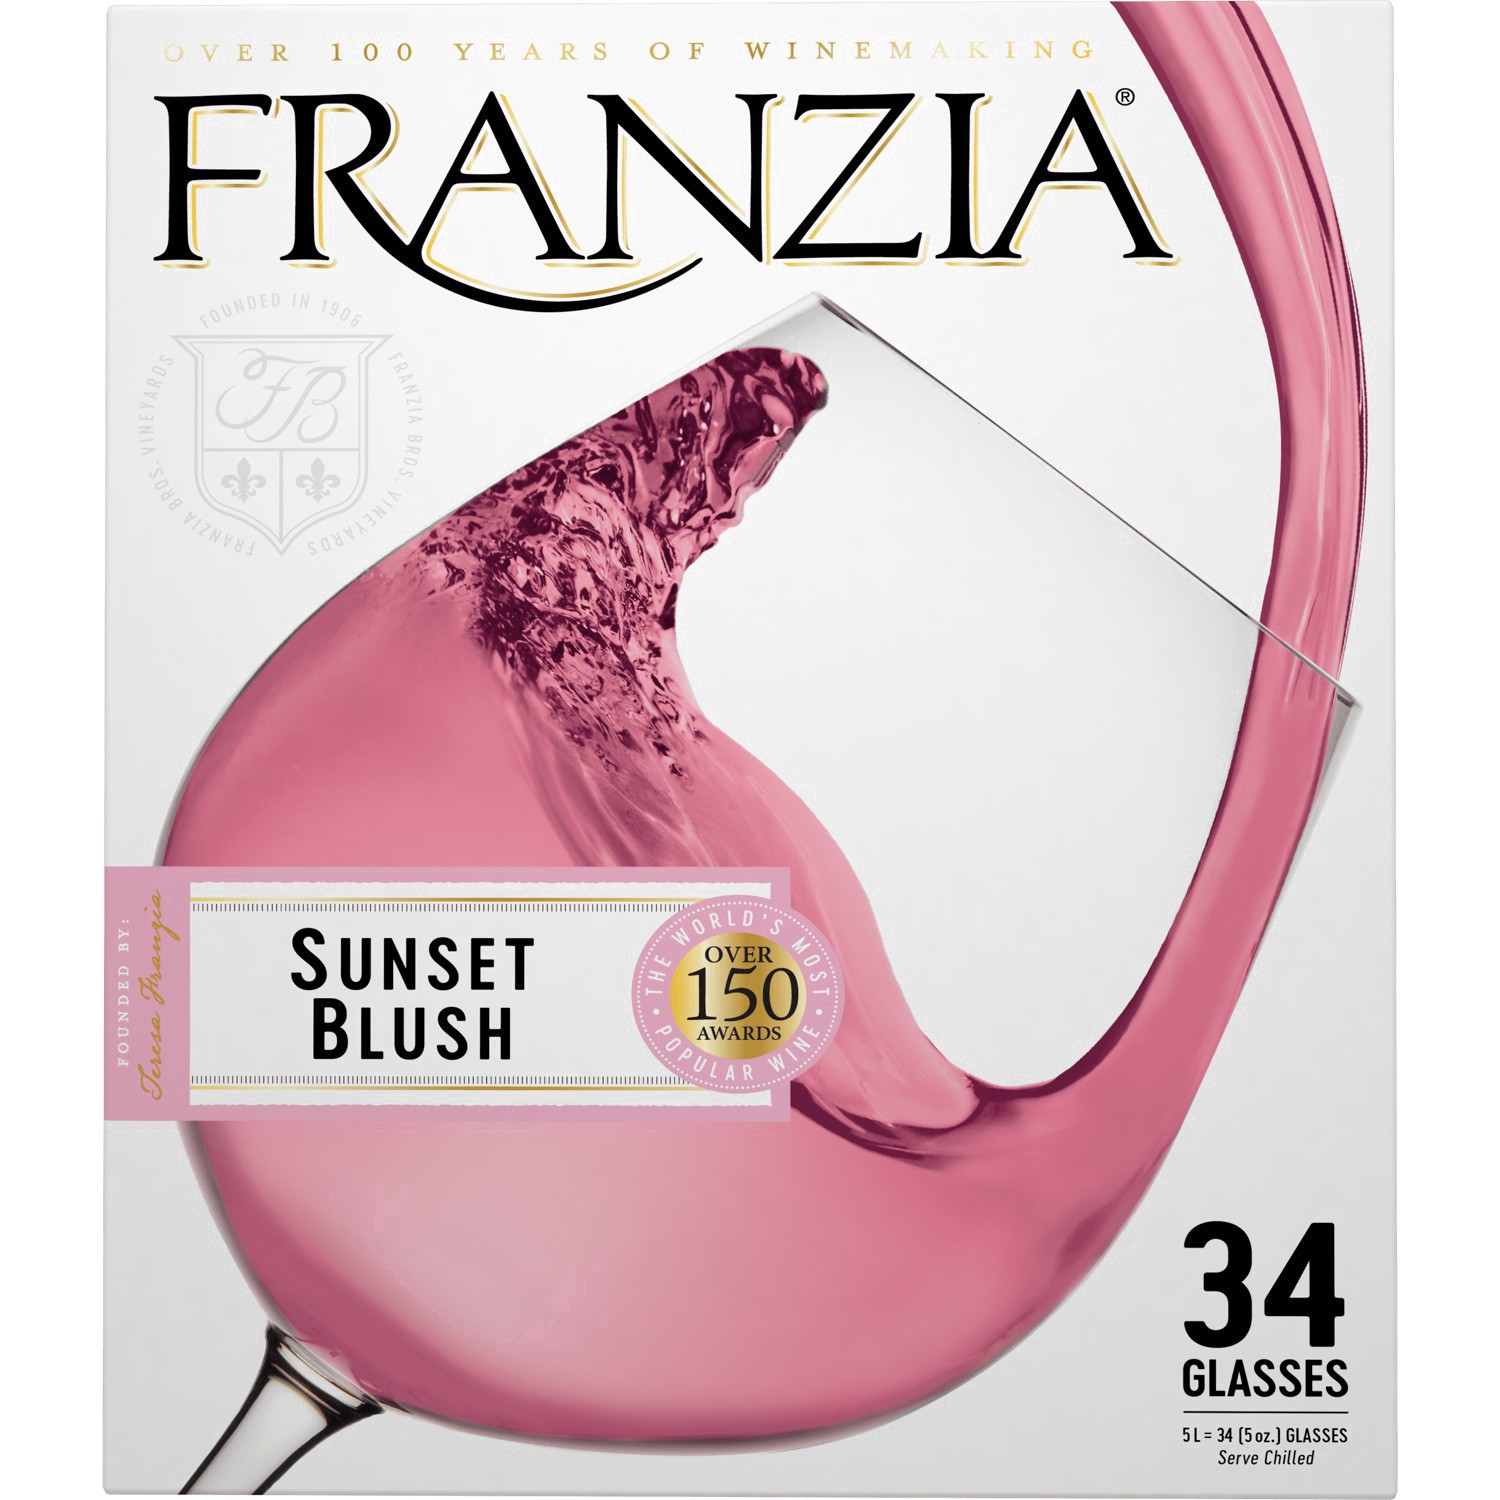 slide 19 of 27, Franzia Sunset Blush Pink Wine, 5 liter box